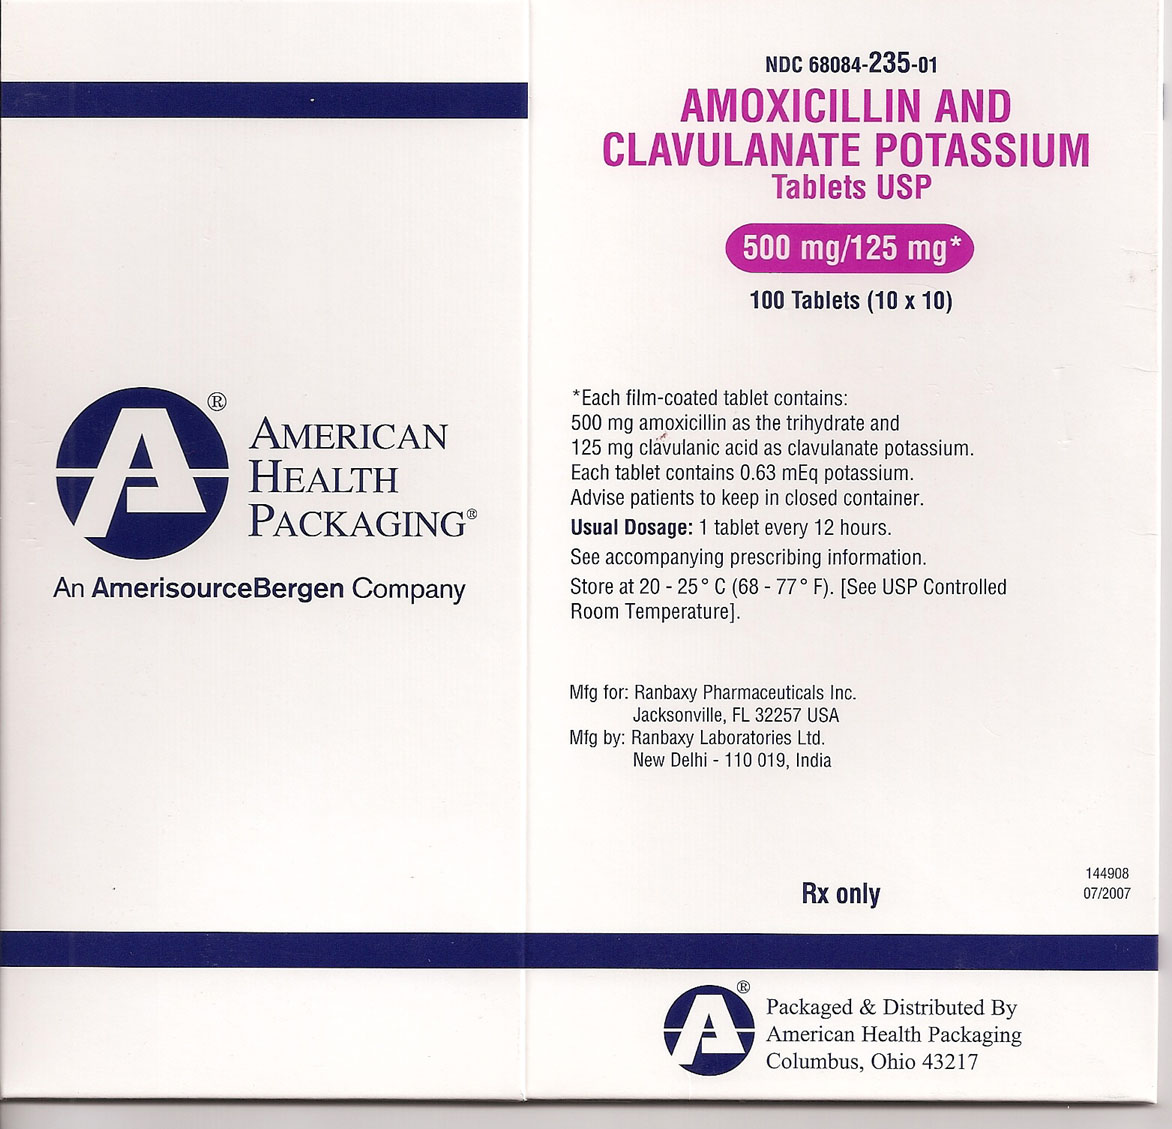 Amoxicillin and Clavulanate Potassium 500mg/125mg label